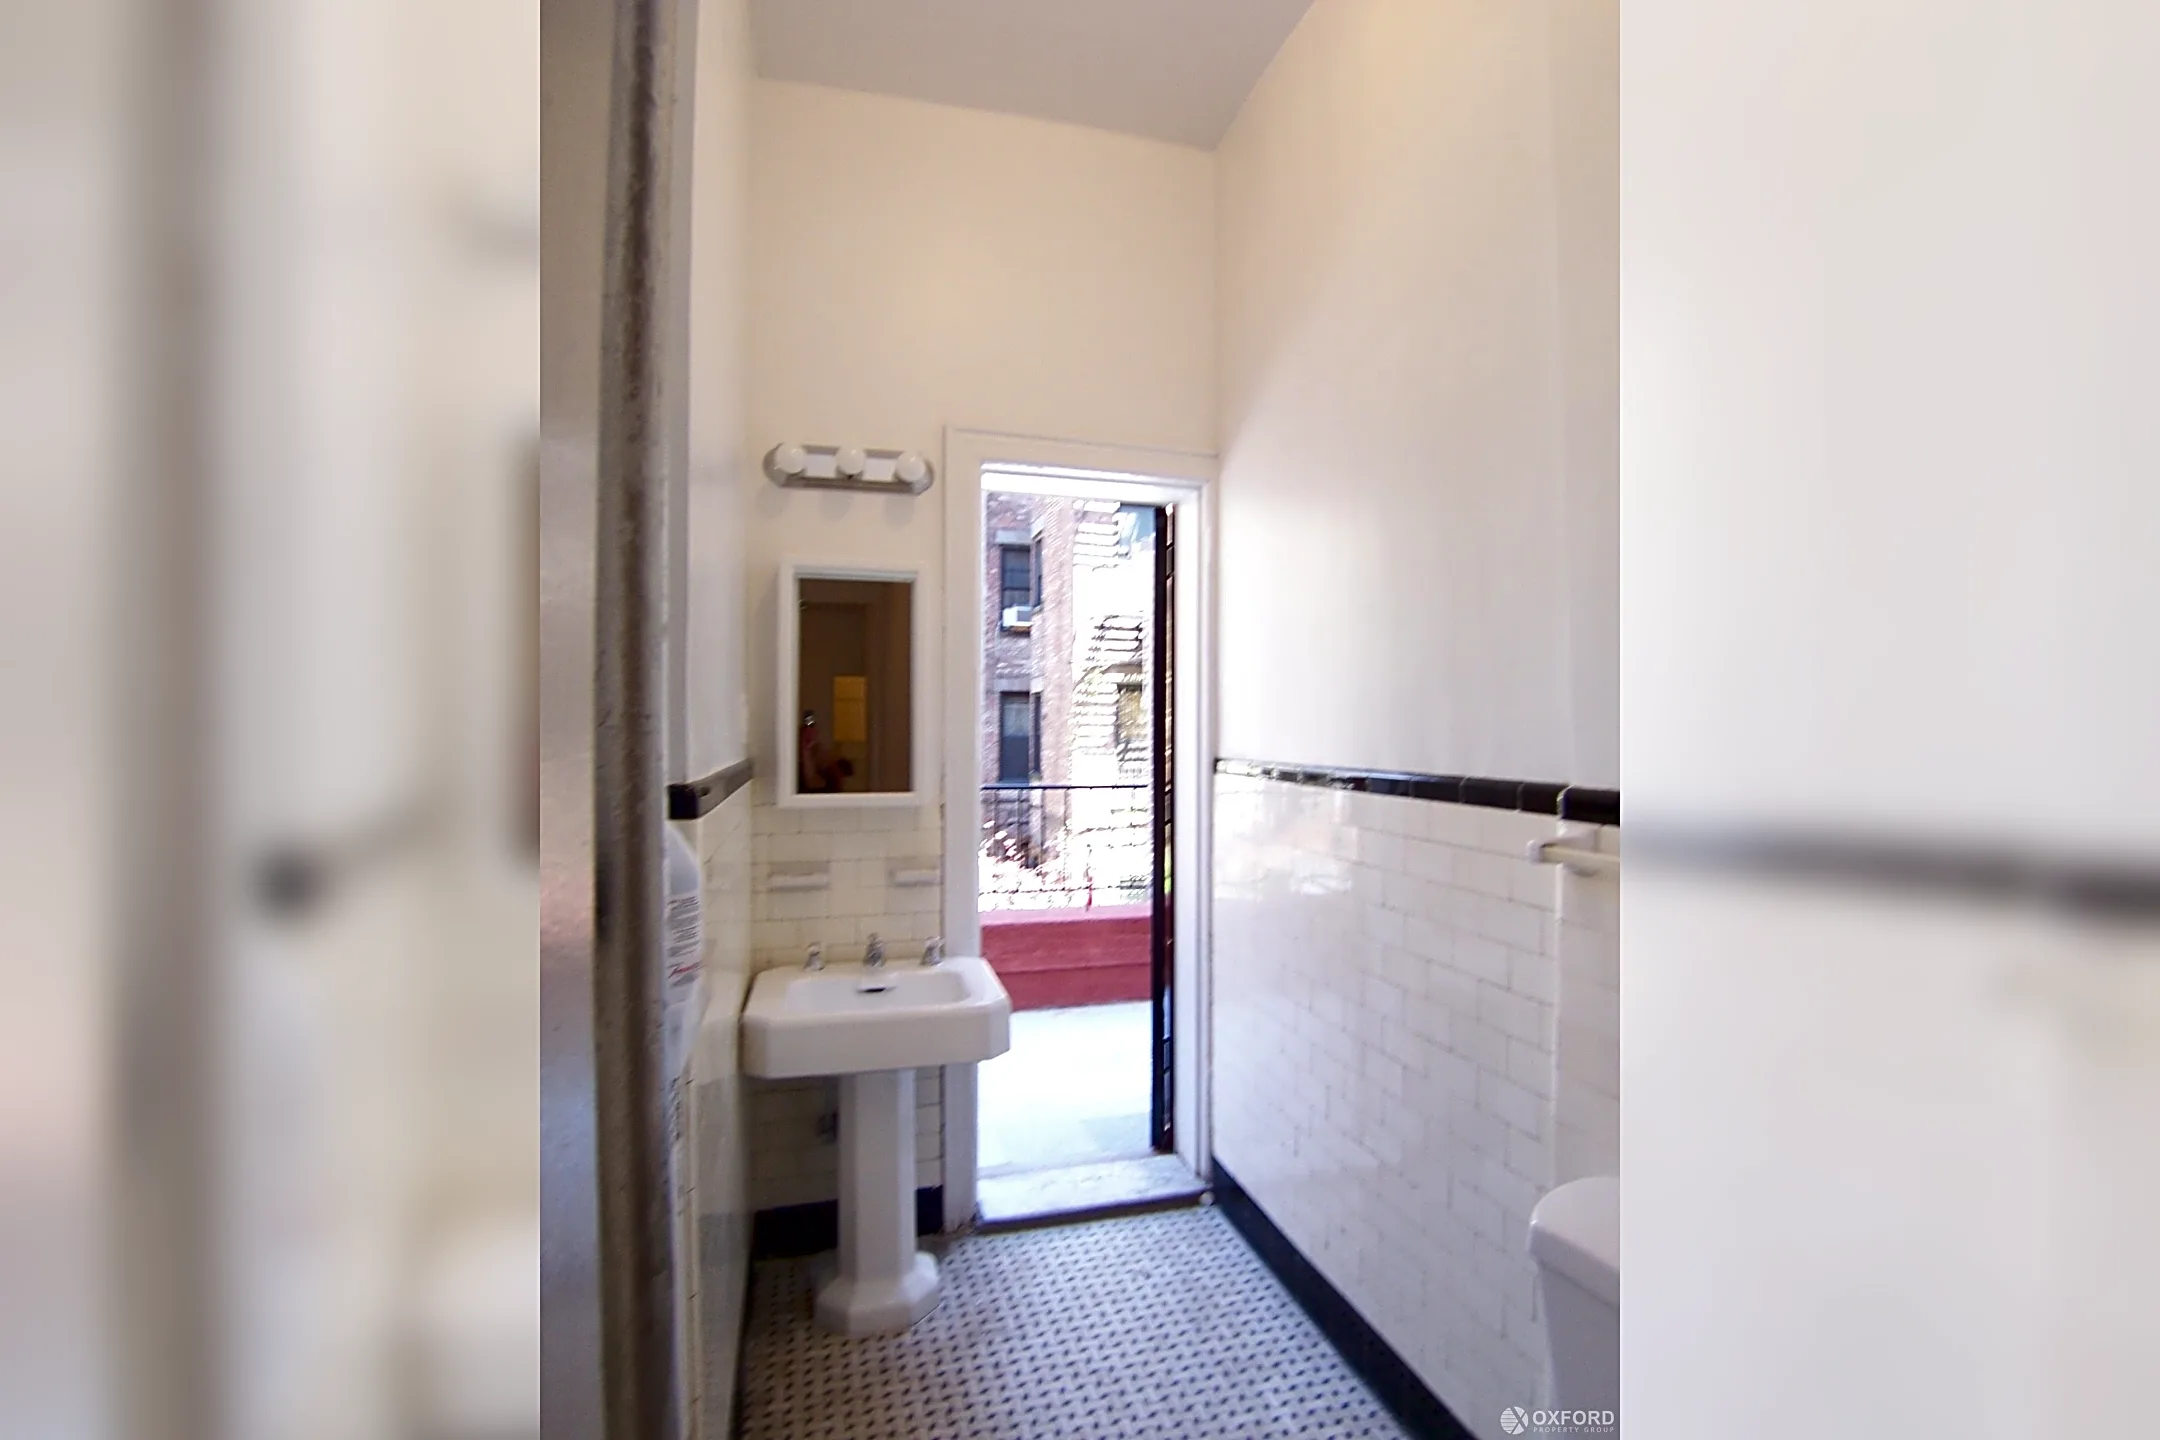 Bathroom - 461 W 49th St #1B - New York, NY